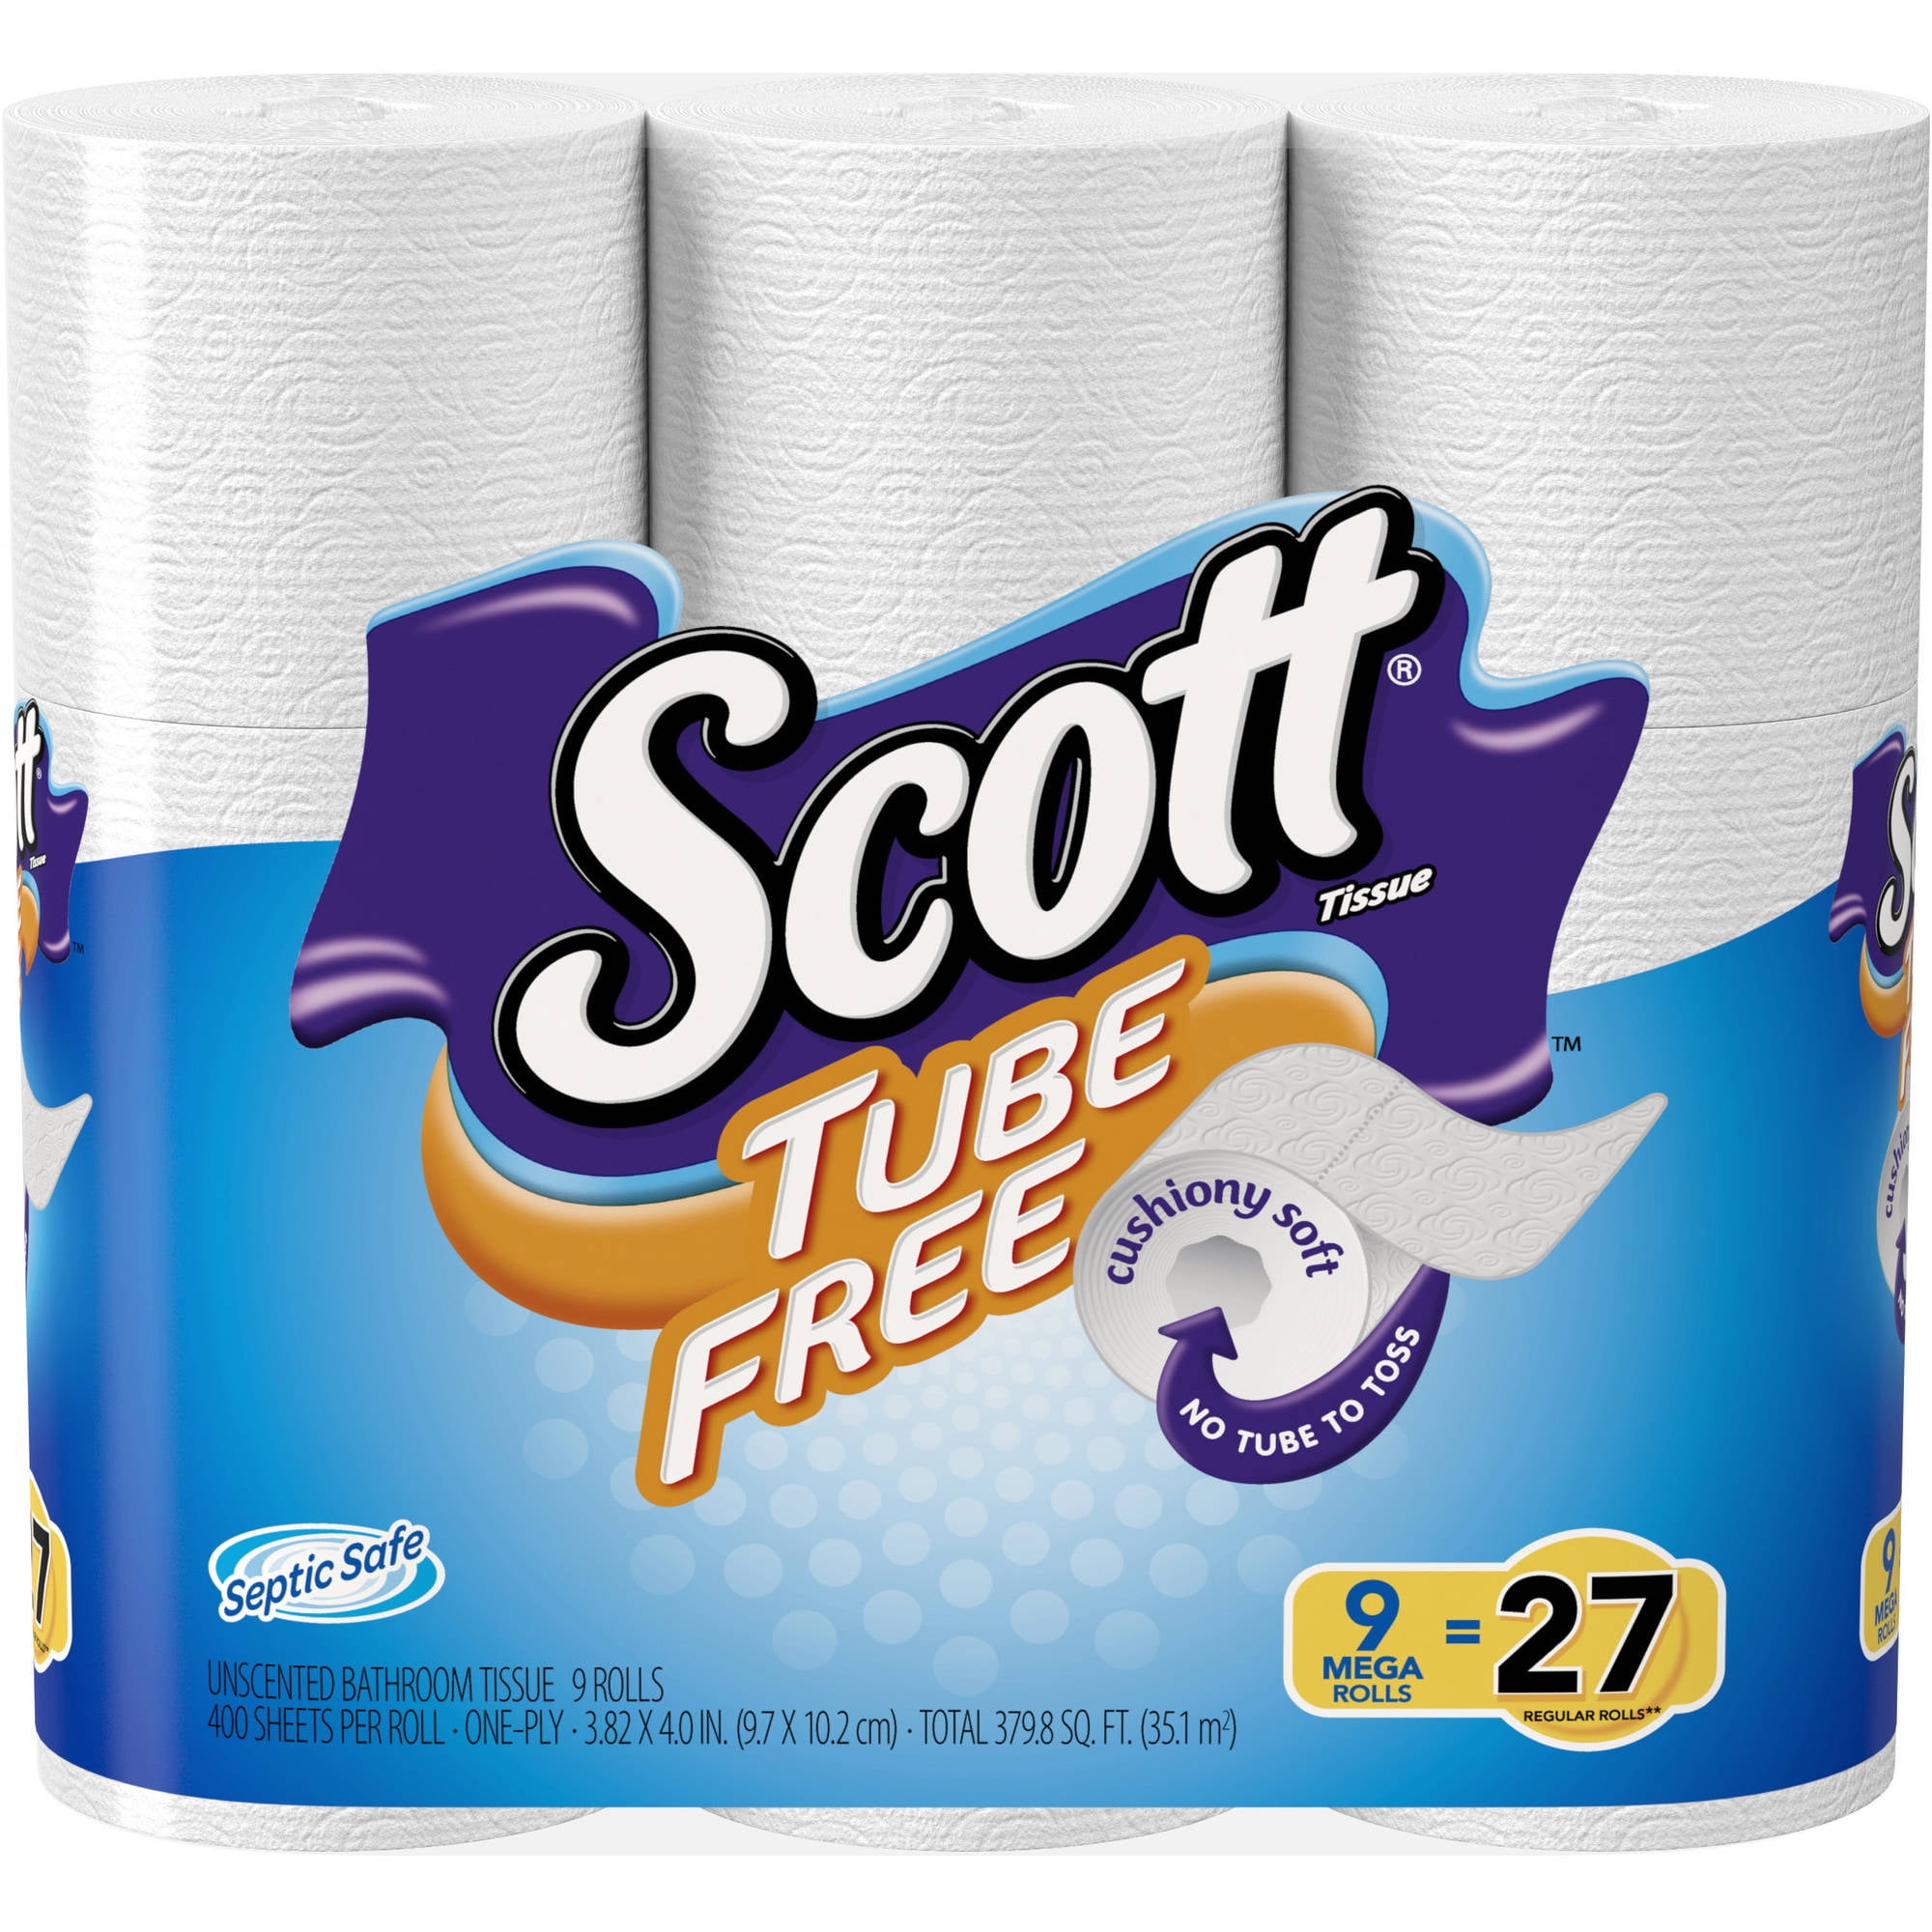 Two reusable center tubes for eco-friendly tube-free toilet paper rolls White 